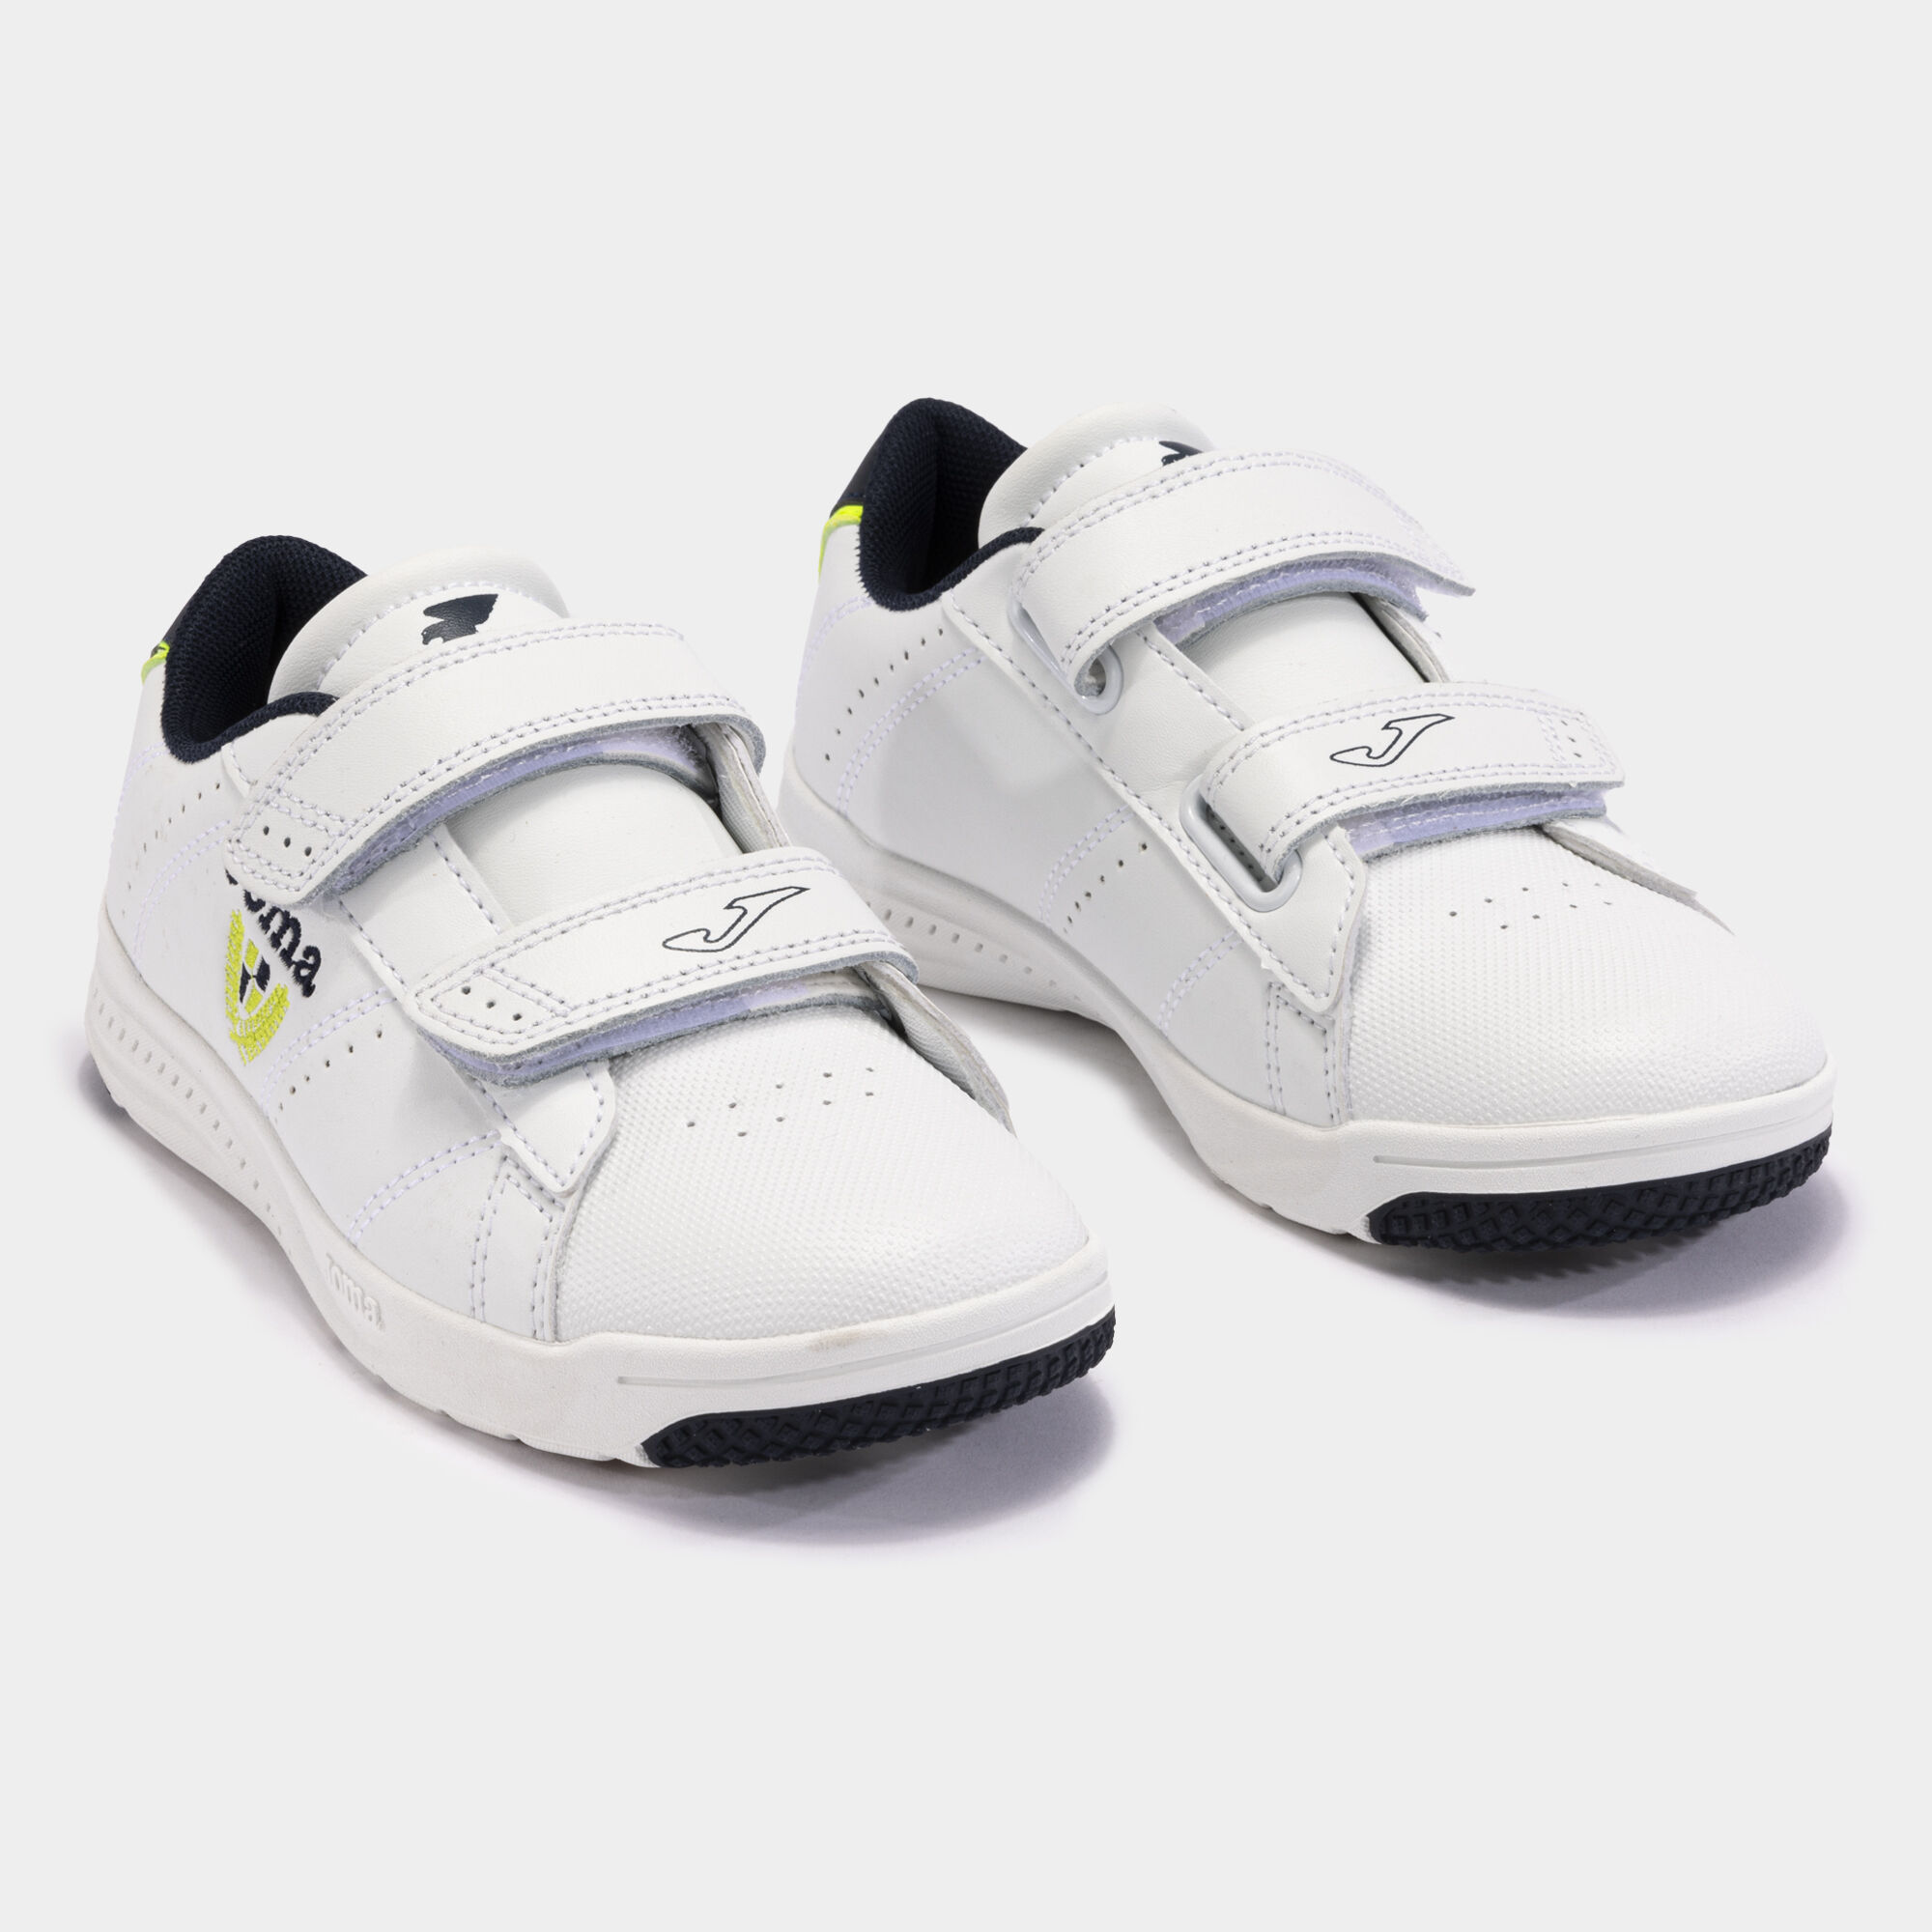 Chaussures casual W.Play Jr 24 junior blanc vert citron